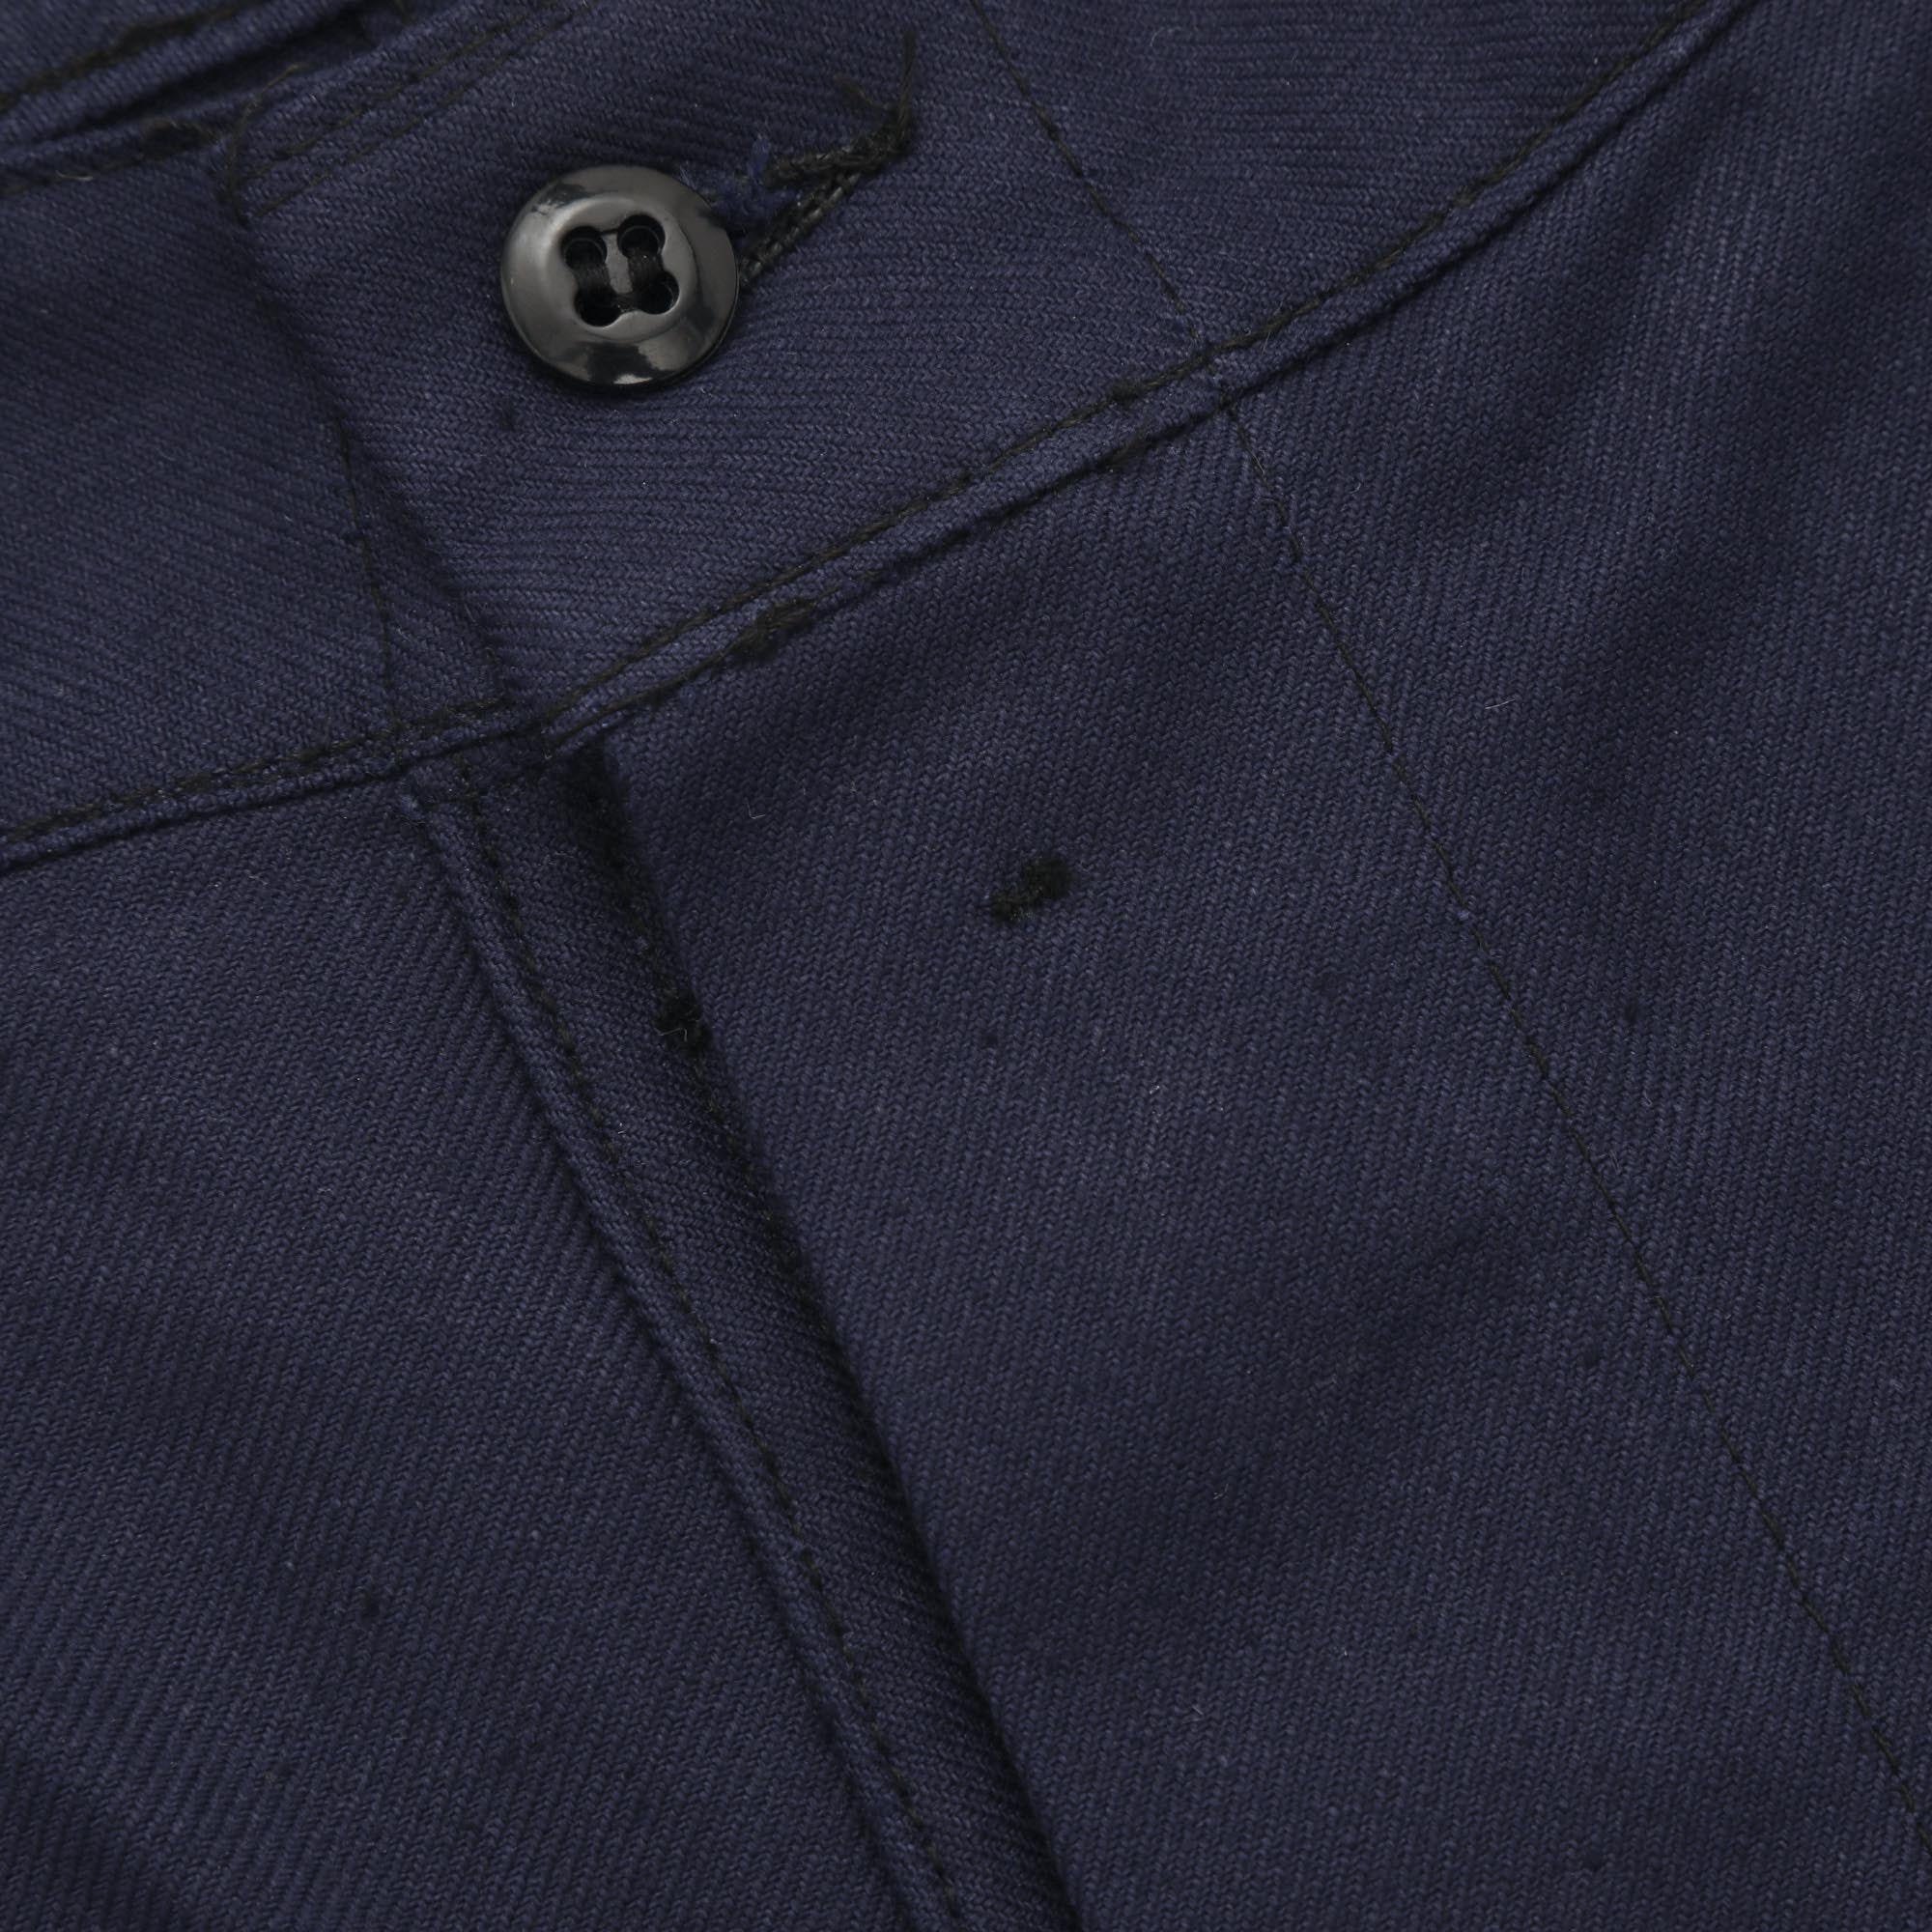 Workwear Pants (30W x 29L)